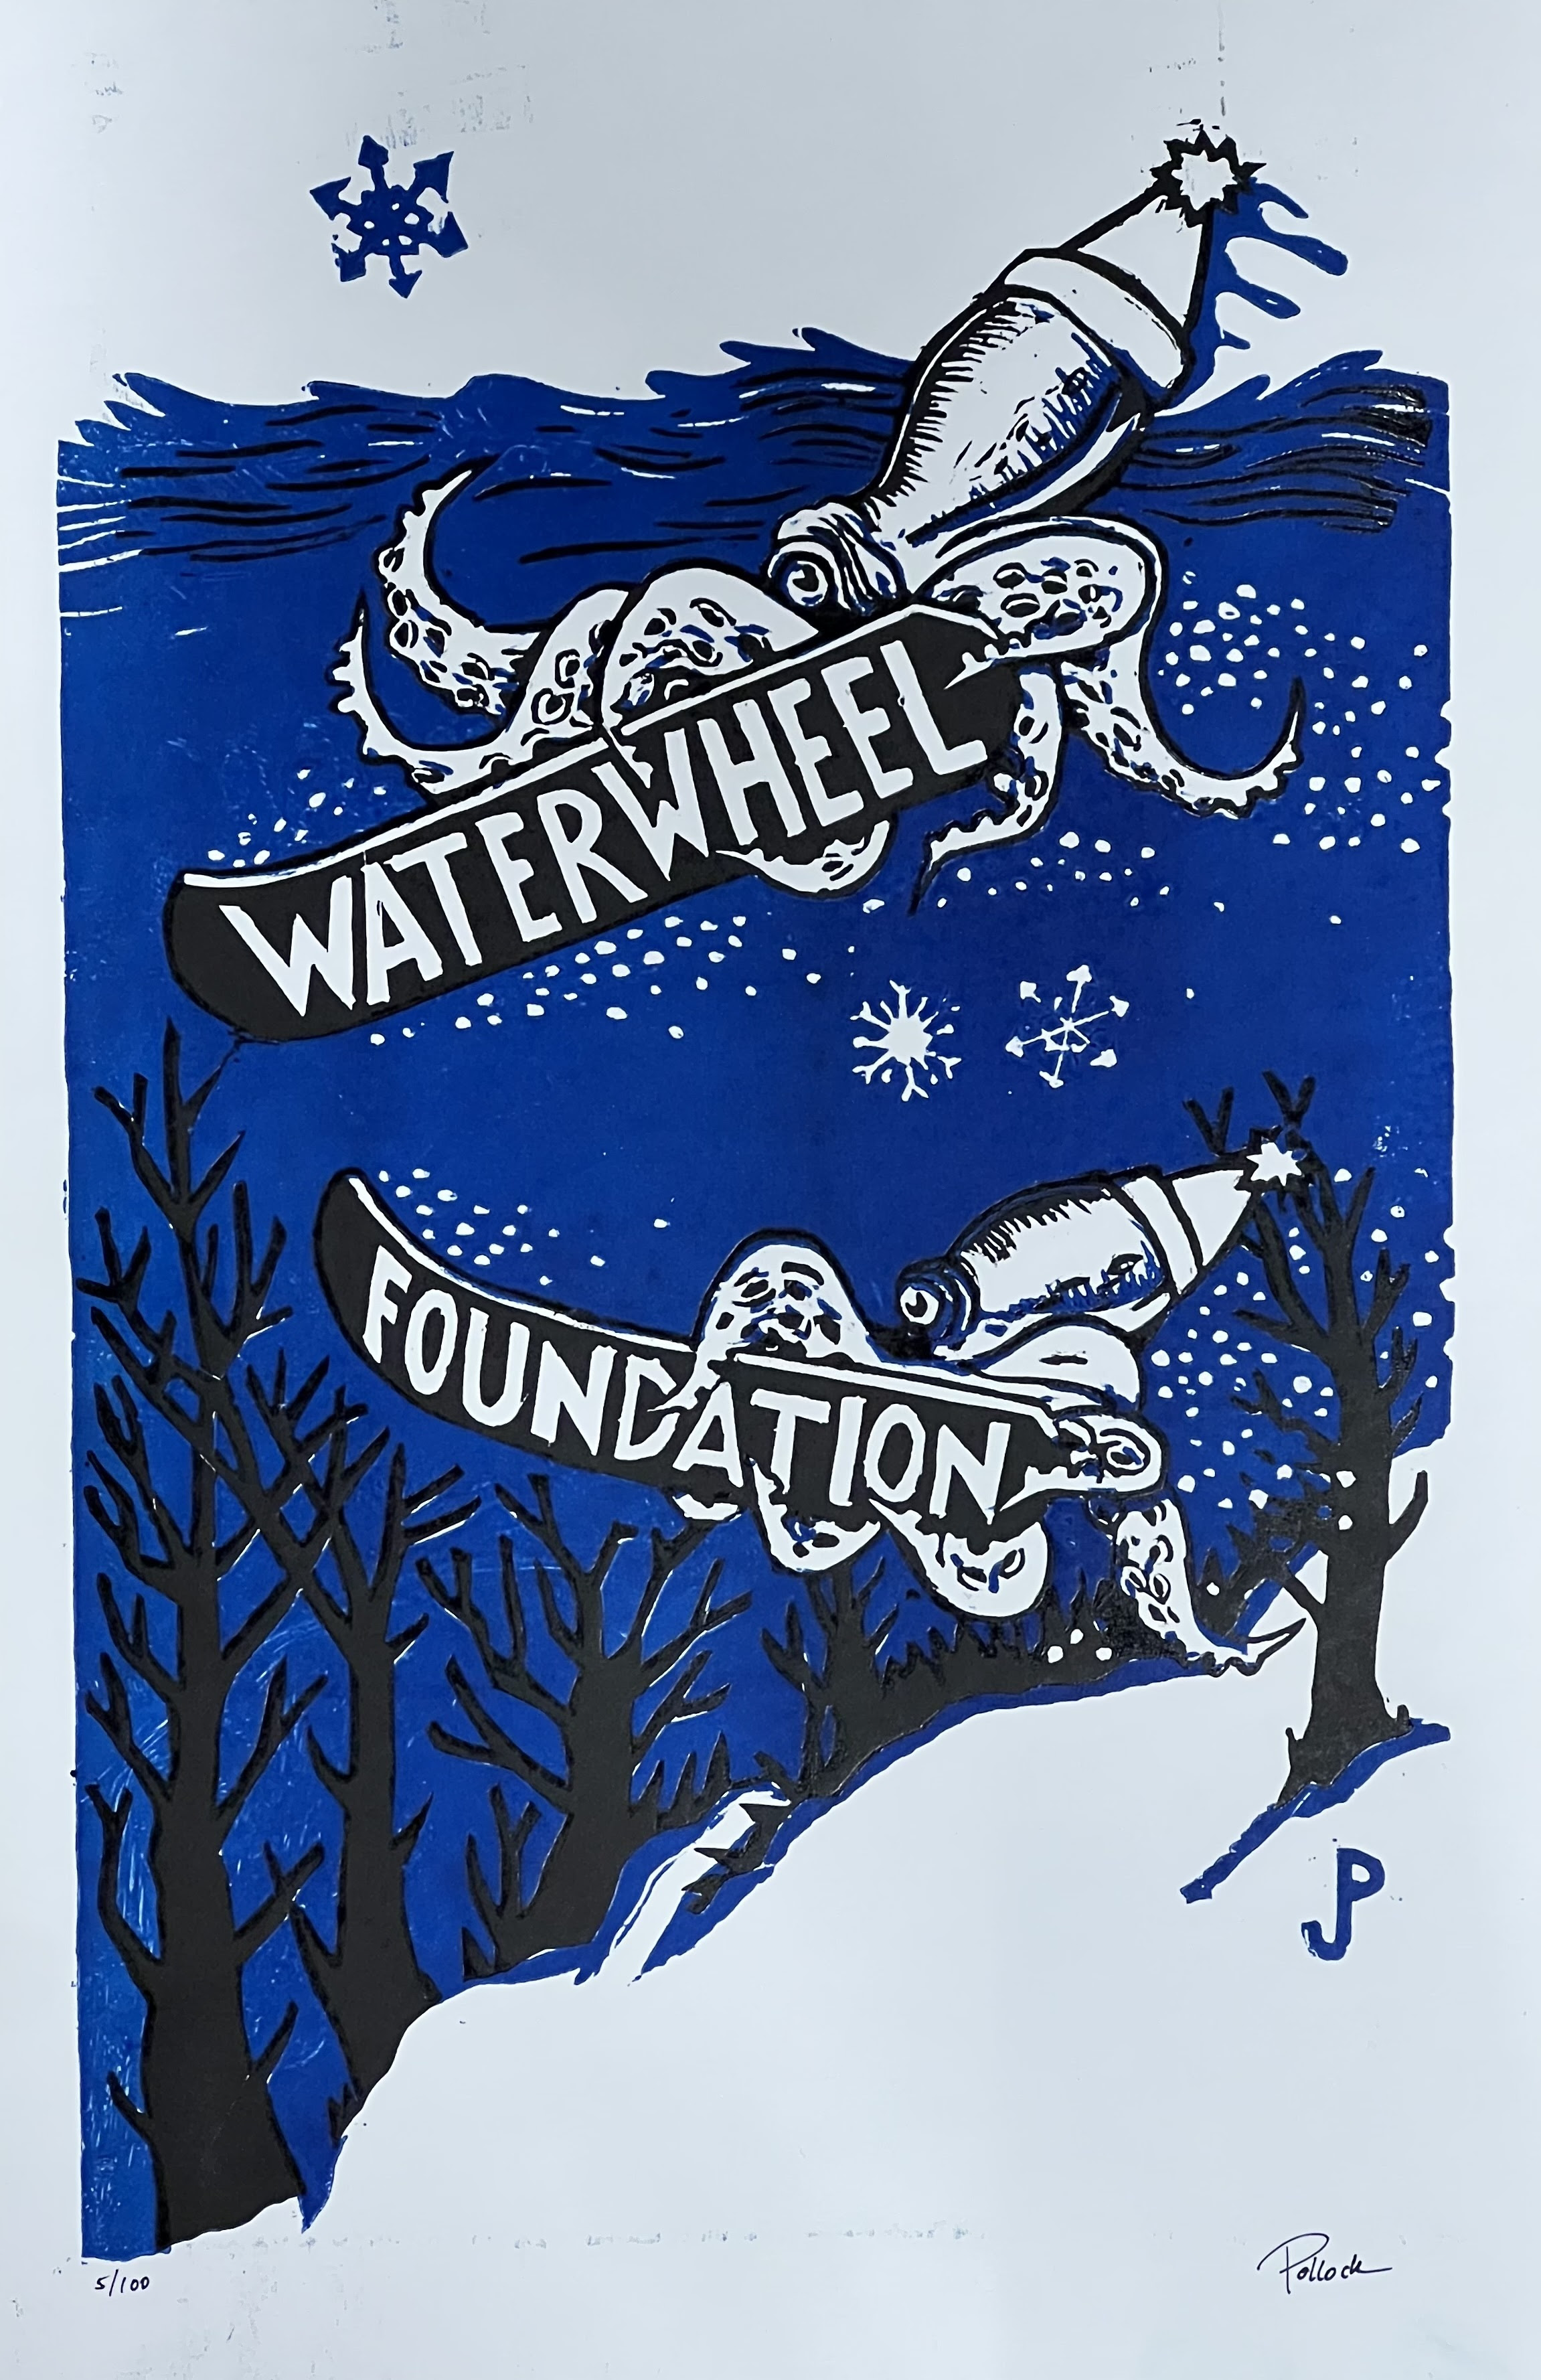 WaterWheel Foundation 2021